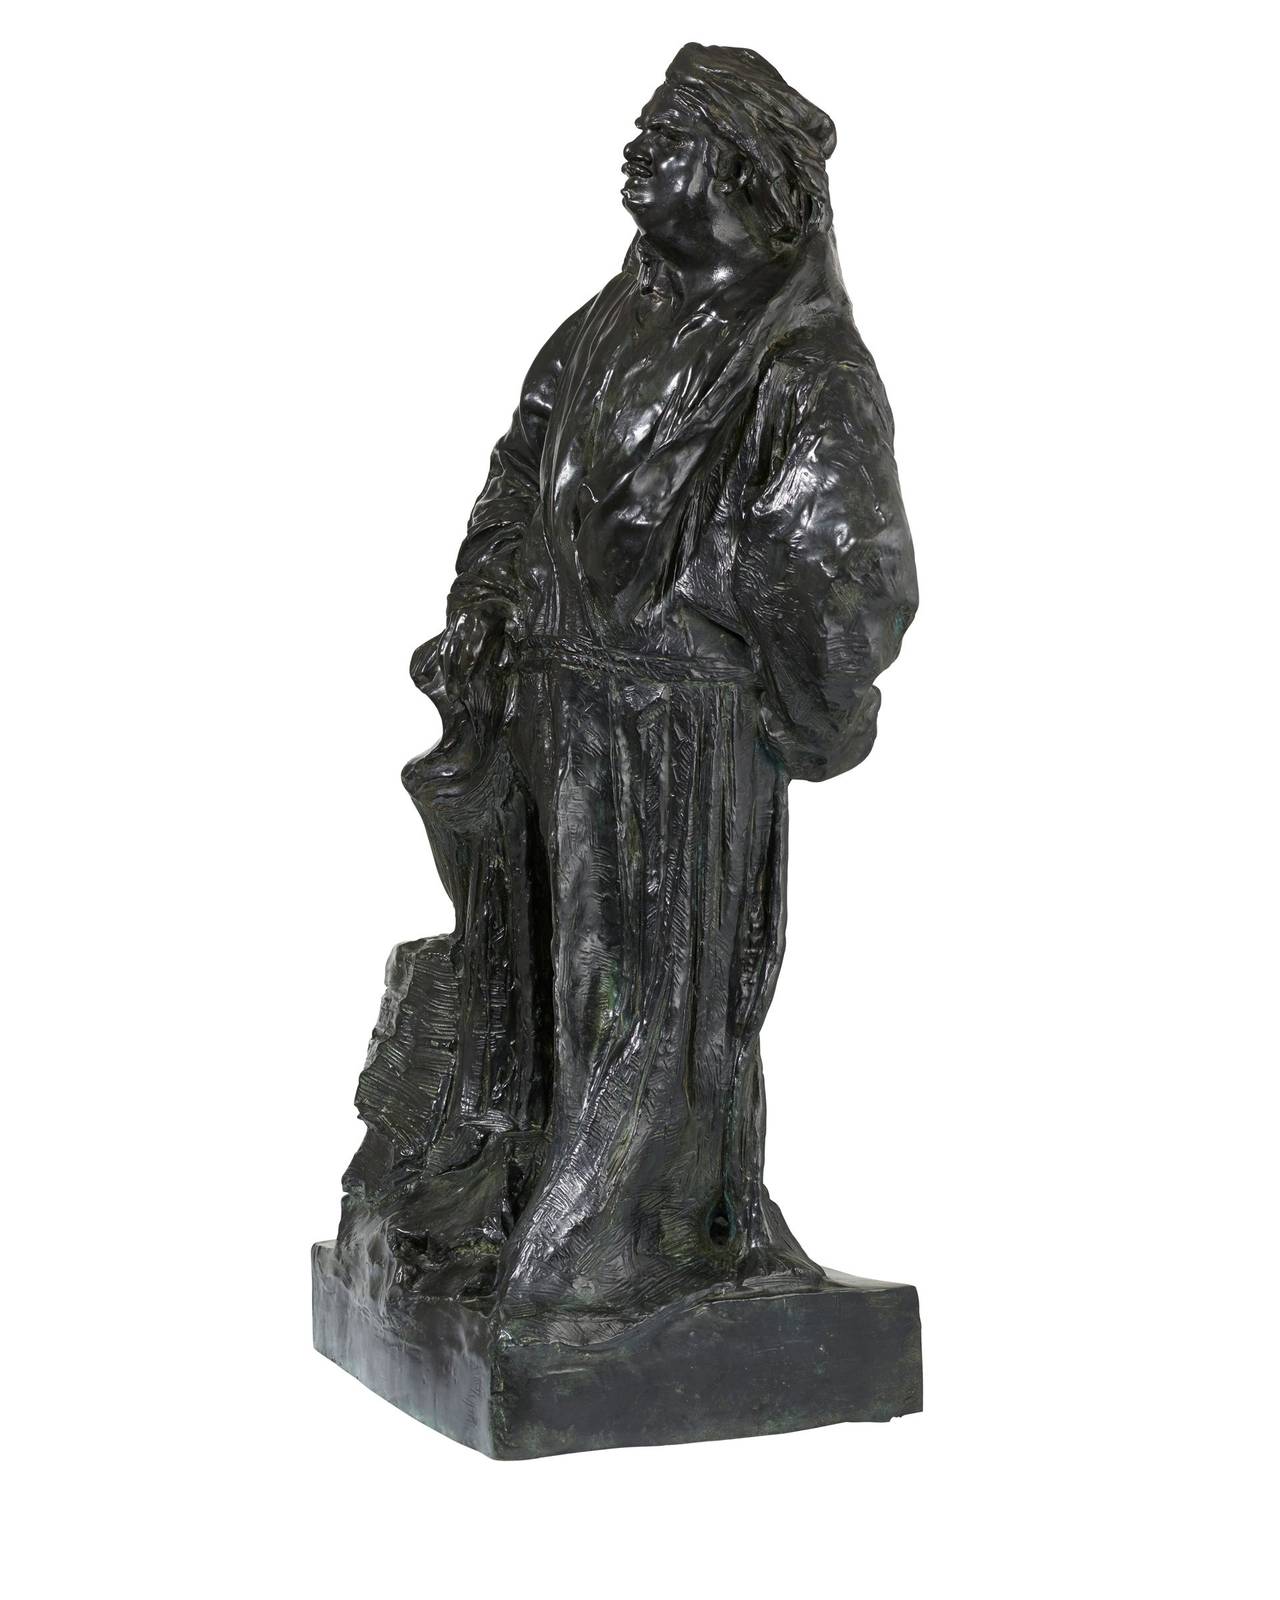 Balzac in Dominican Robe - Sculpture by Auguste Rodin